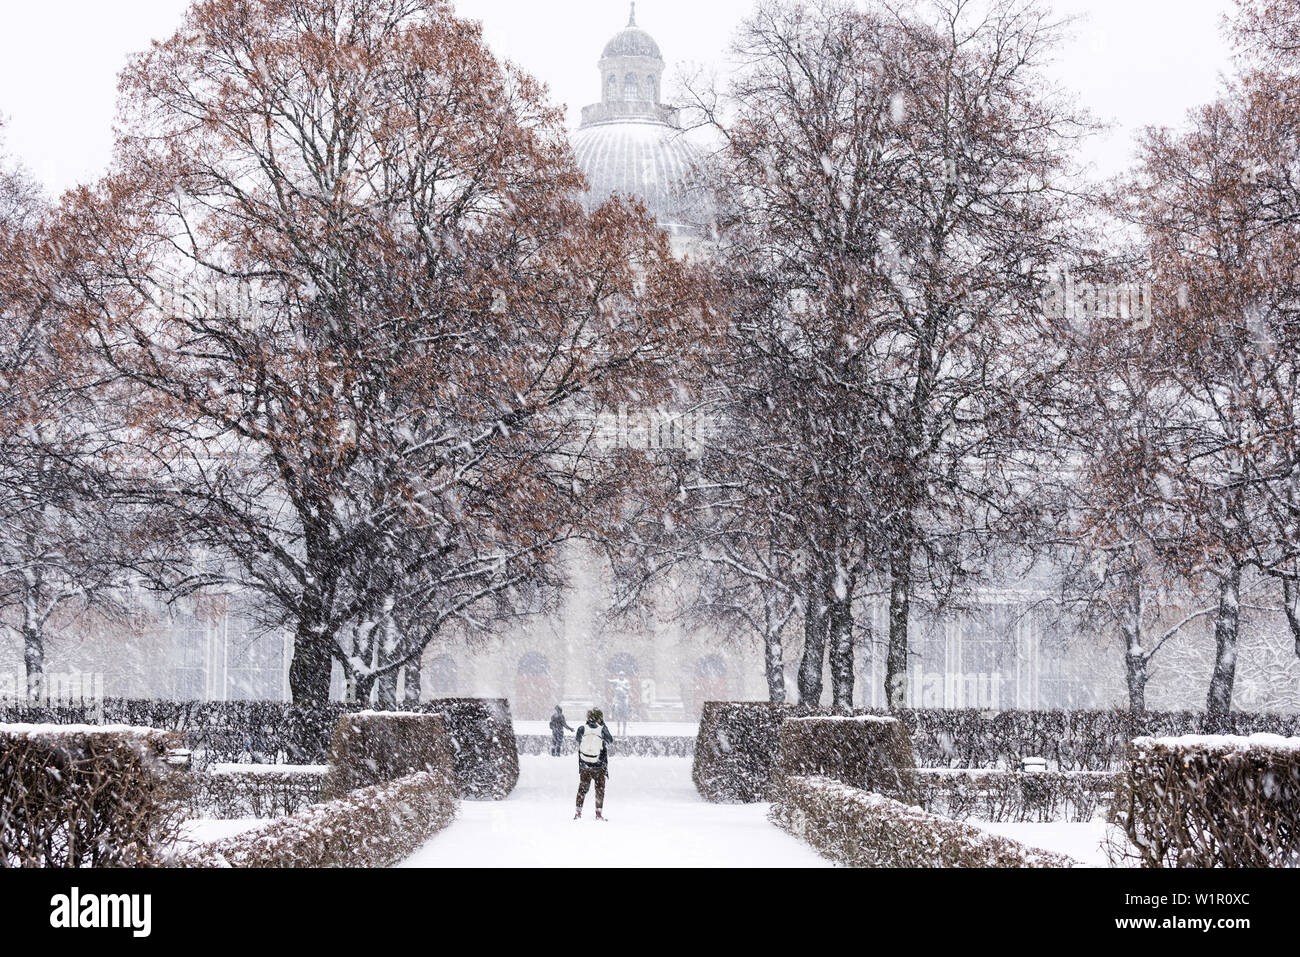 Bayerische Staatskanzlei during Snow Fall in Hofgarten, Munich, Germany Stock Photo